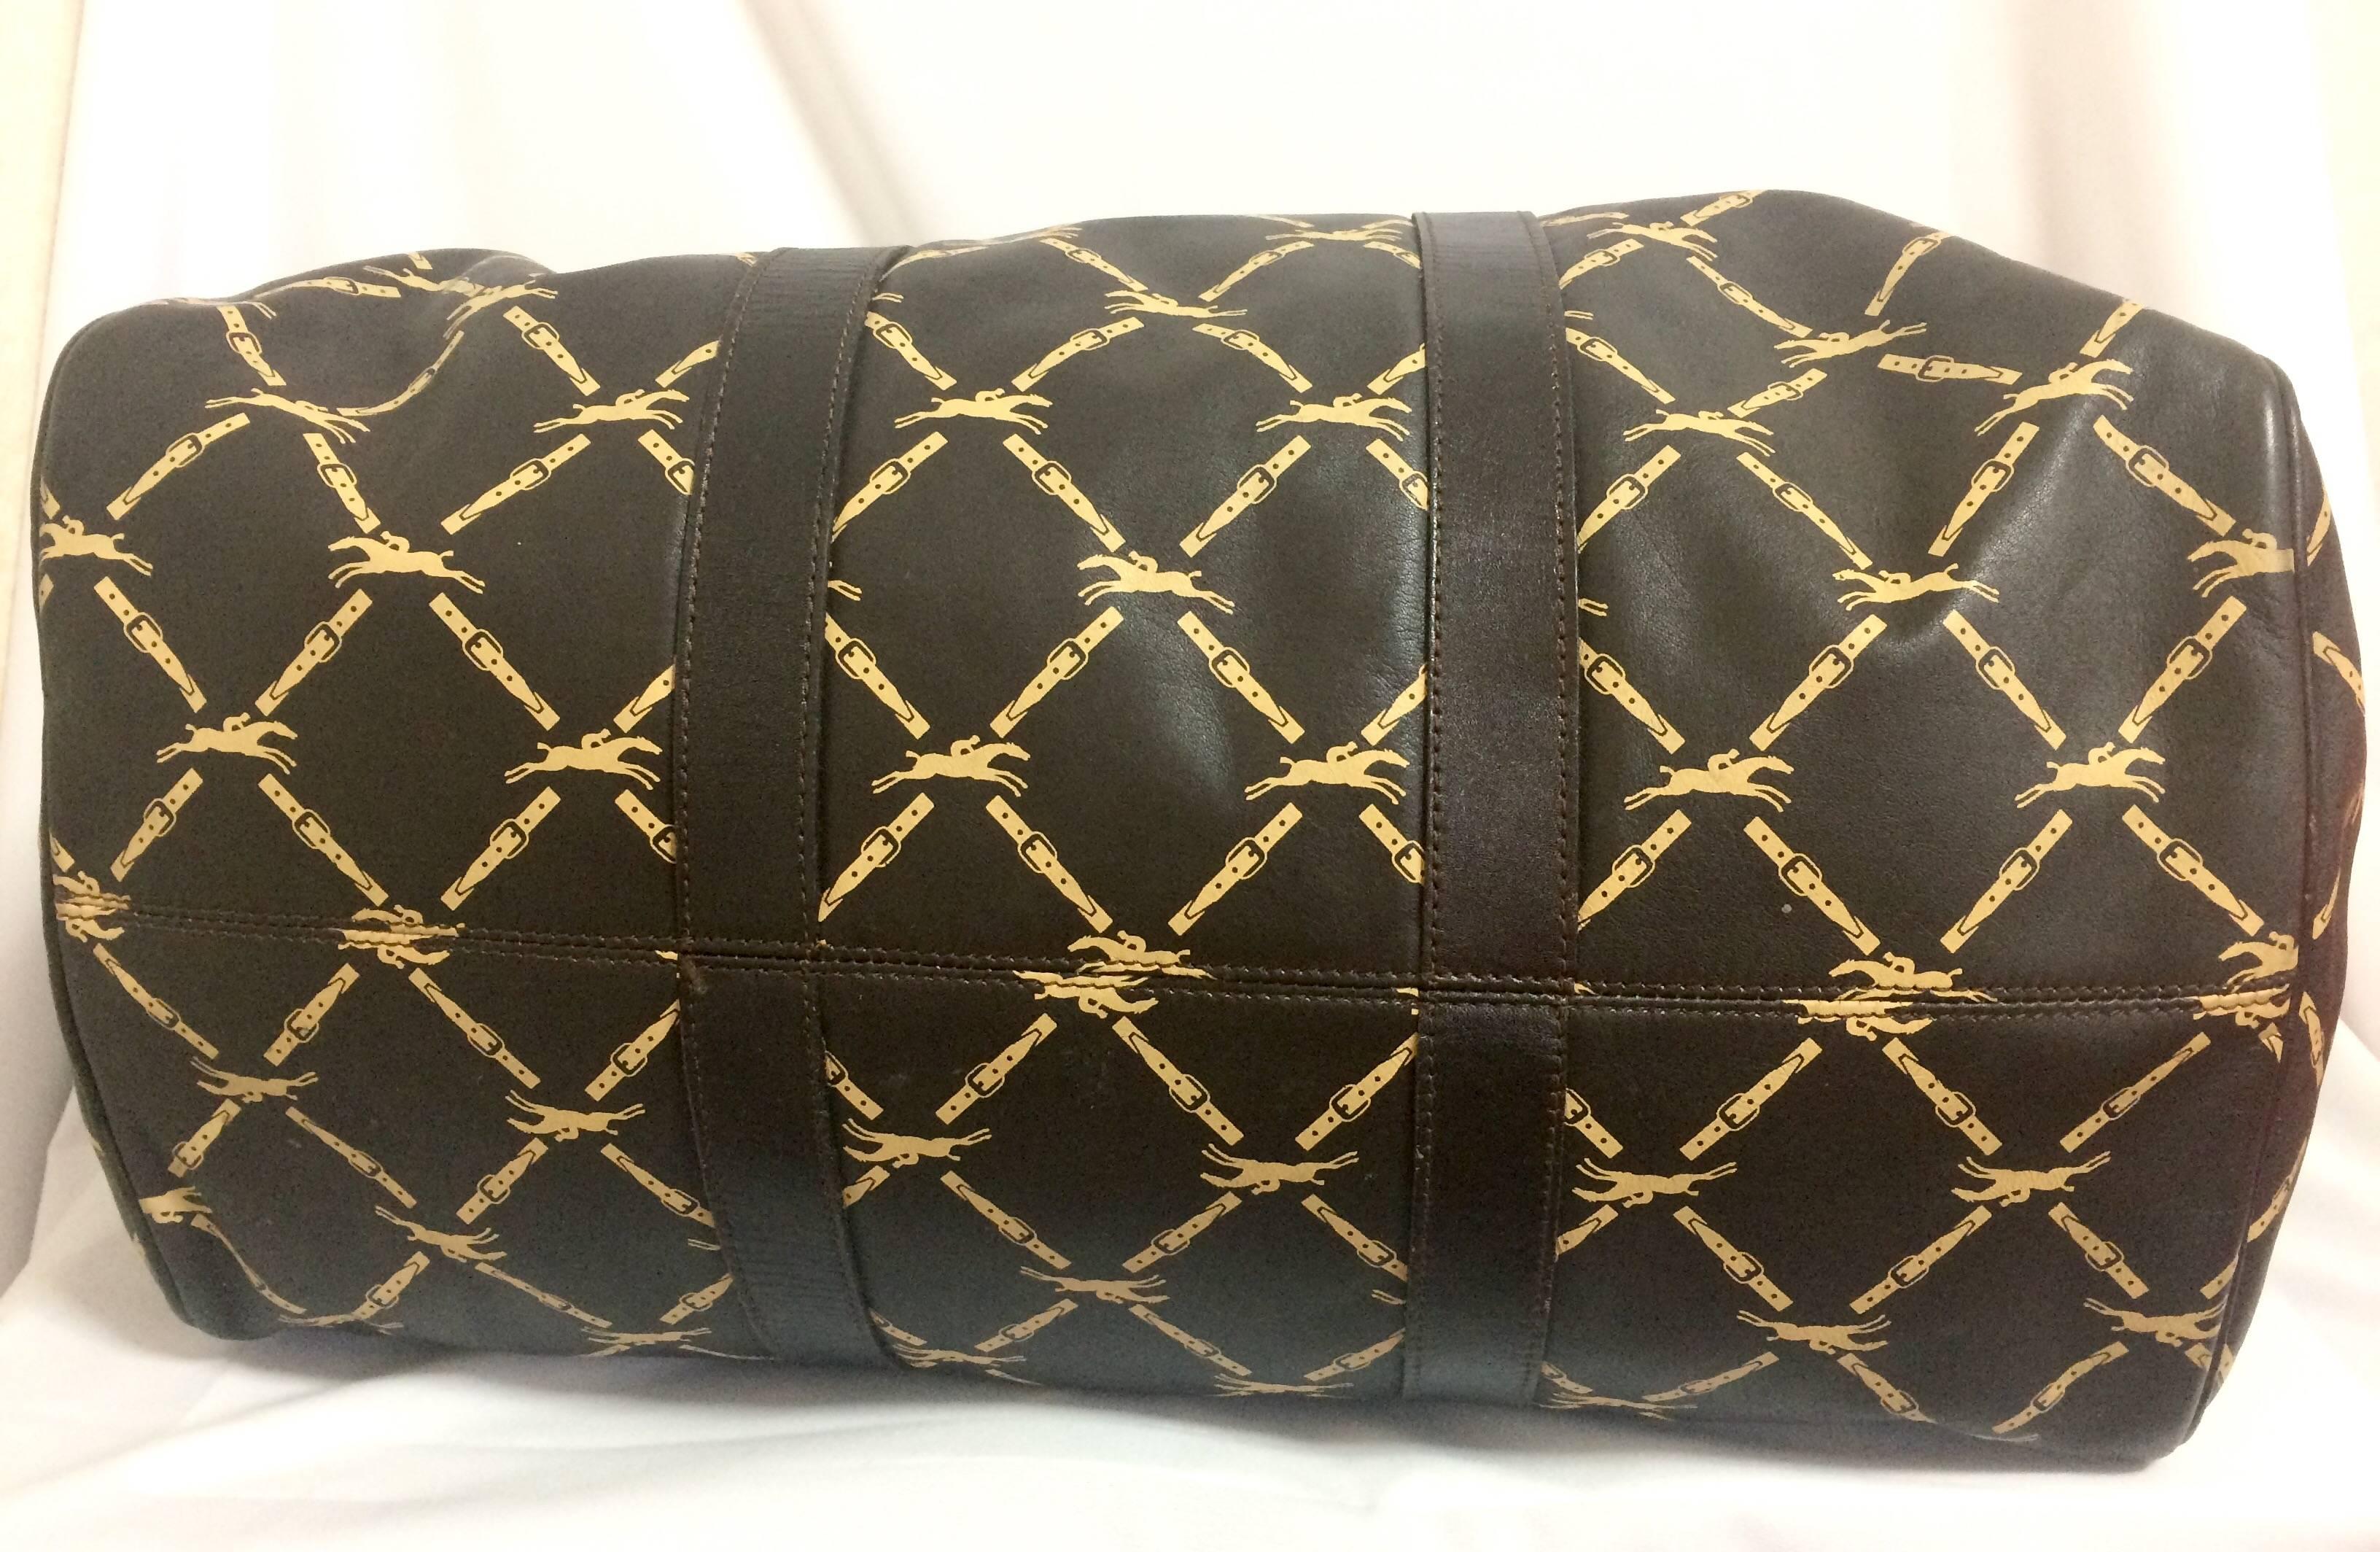 longchamp leather duffle bag